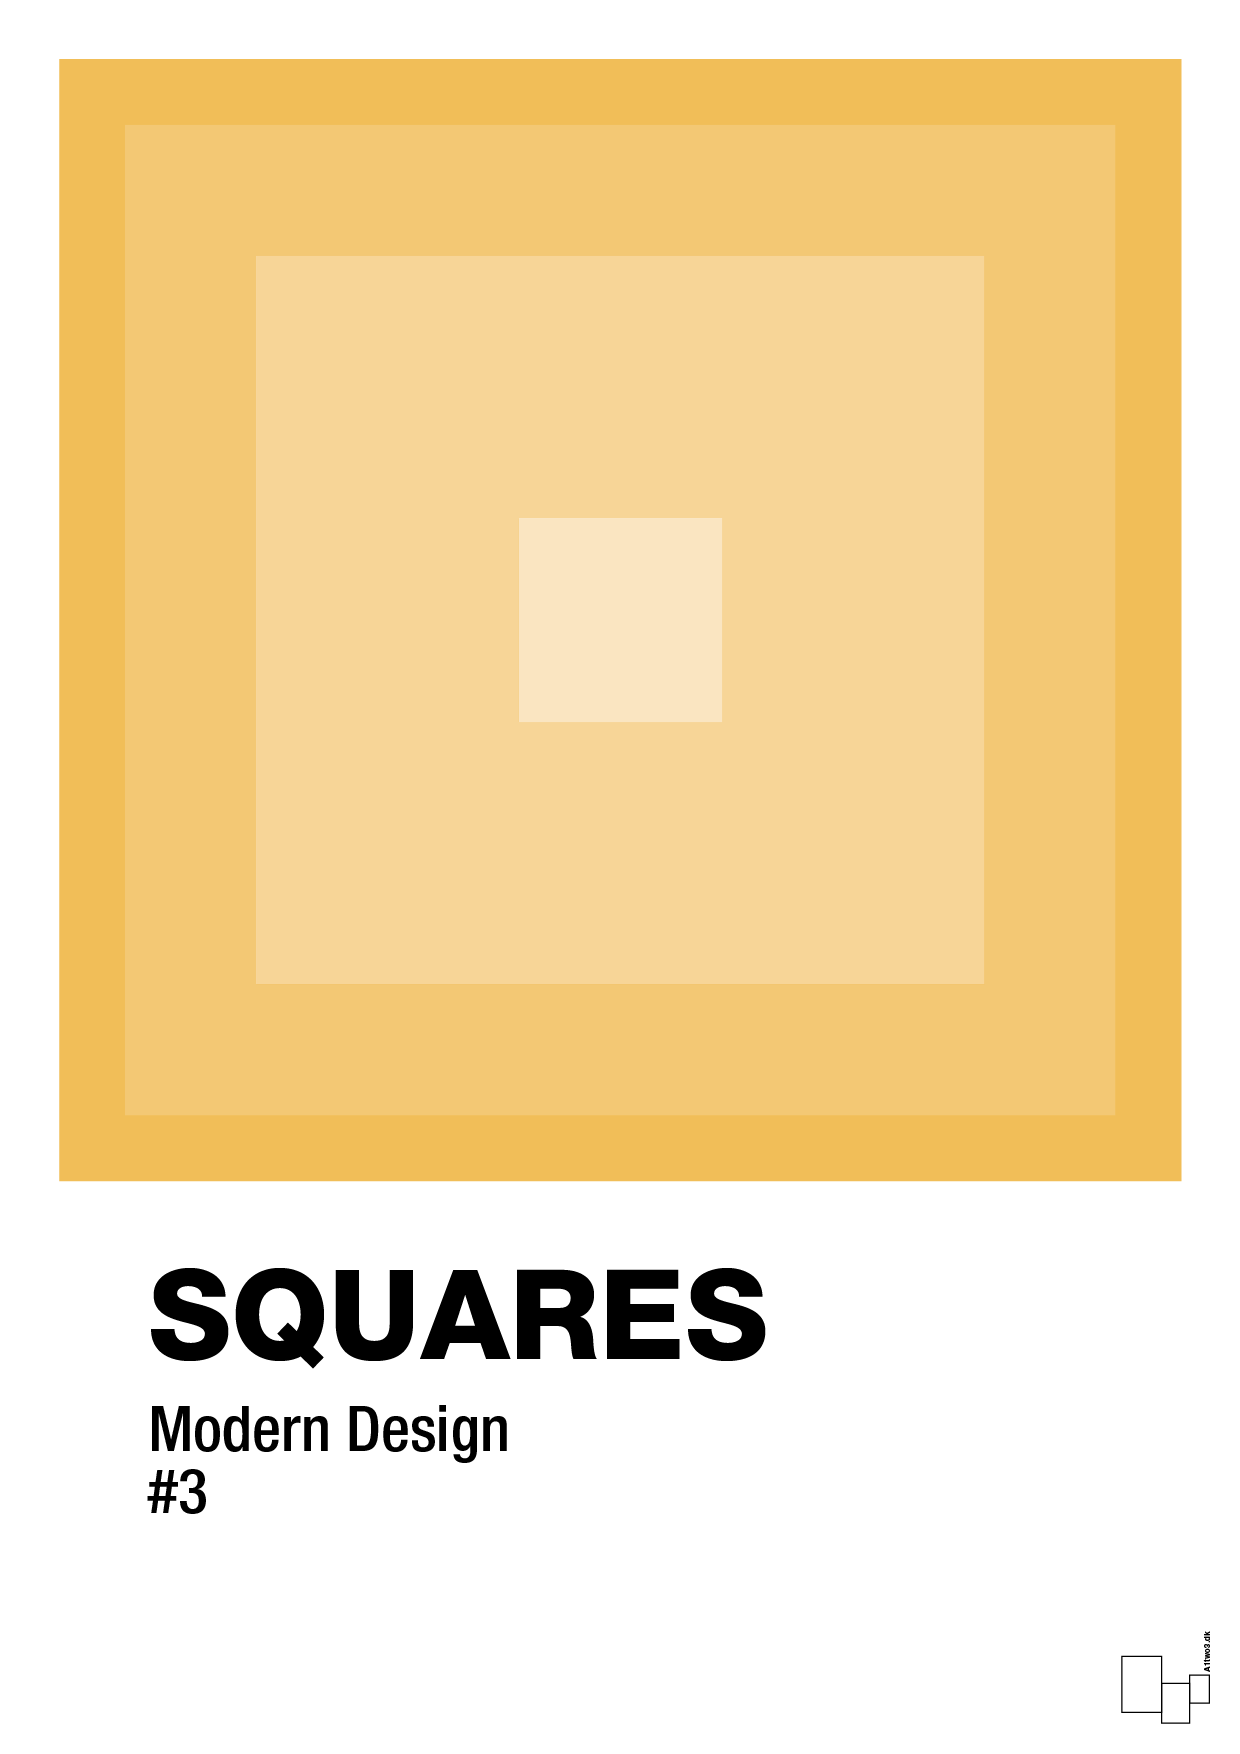 squares #3 - Plakat med Grafik i Honeycomb